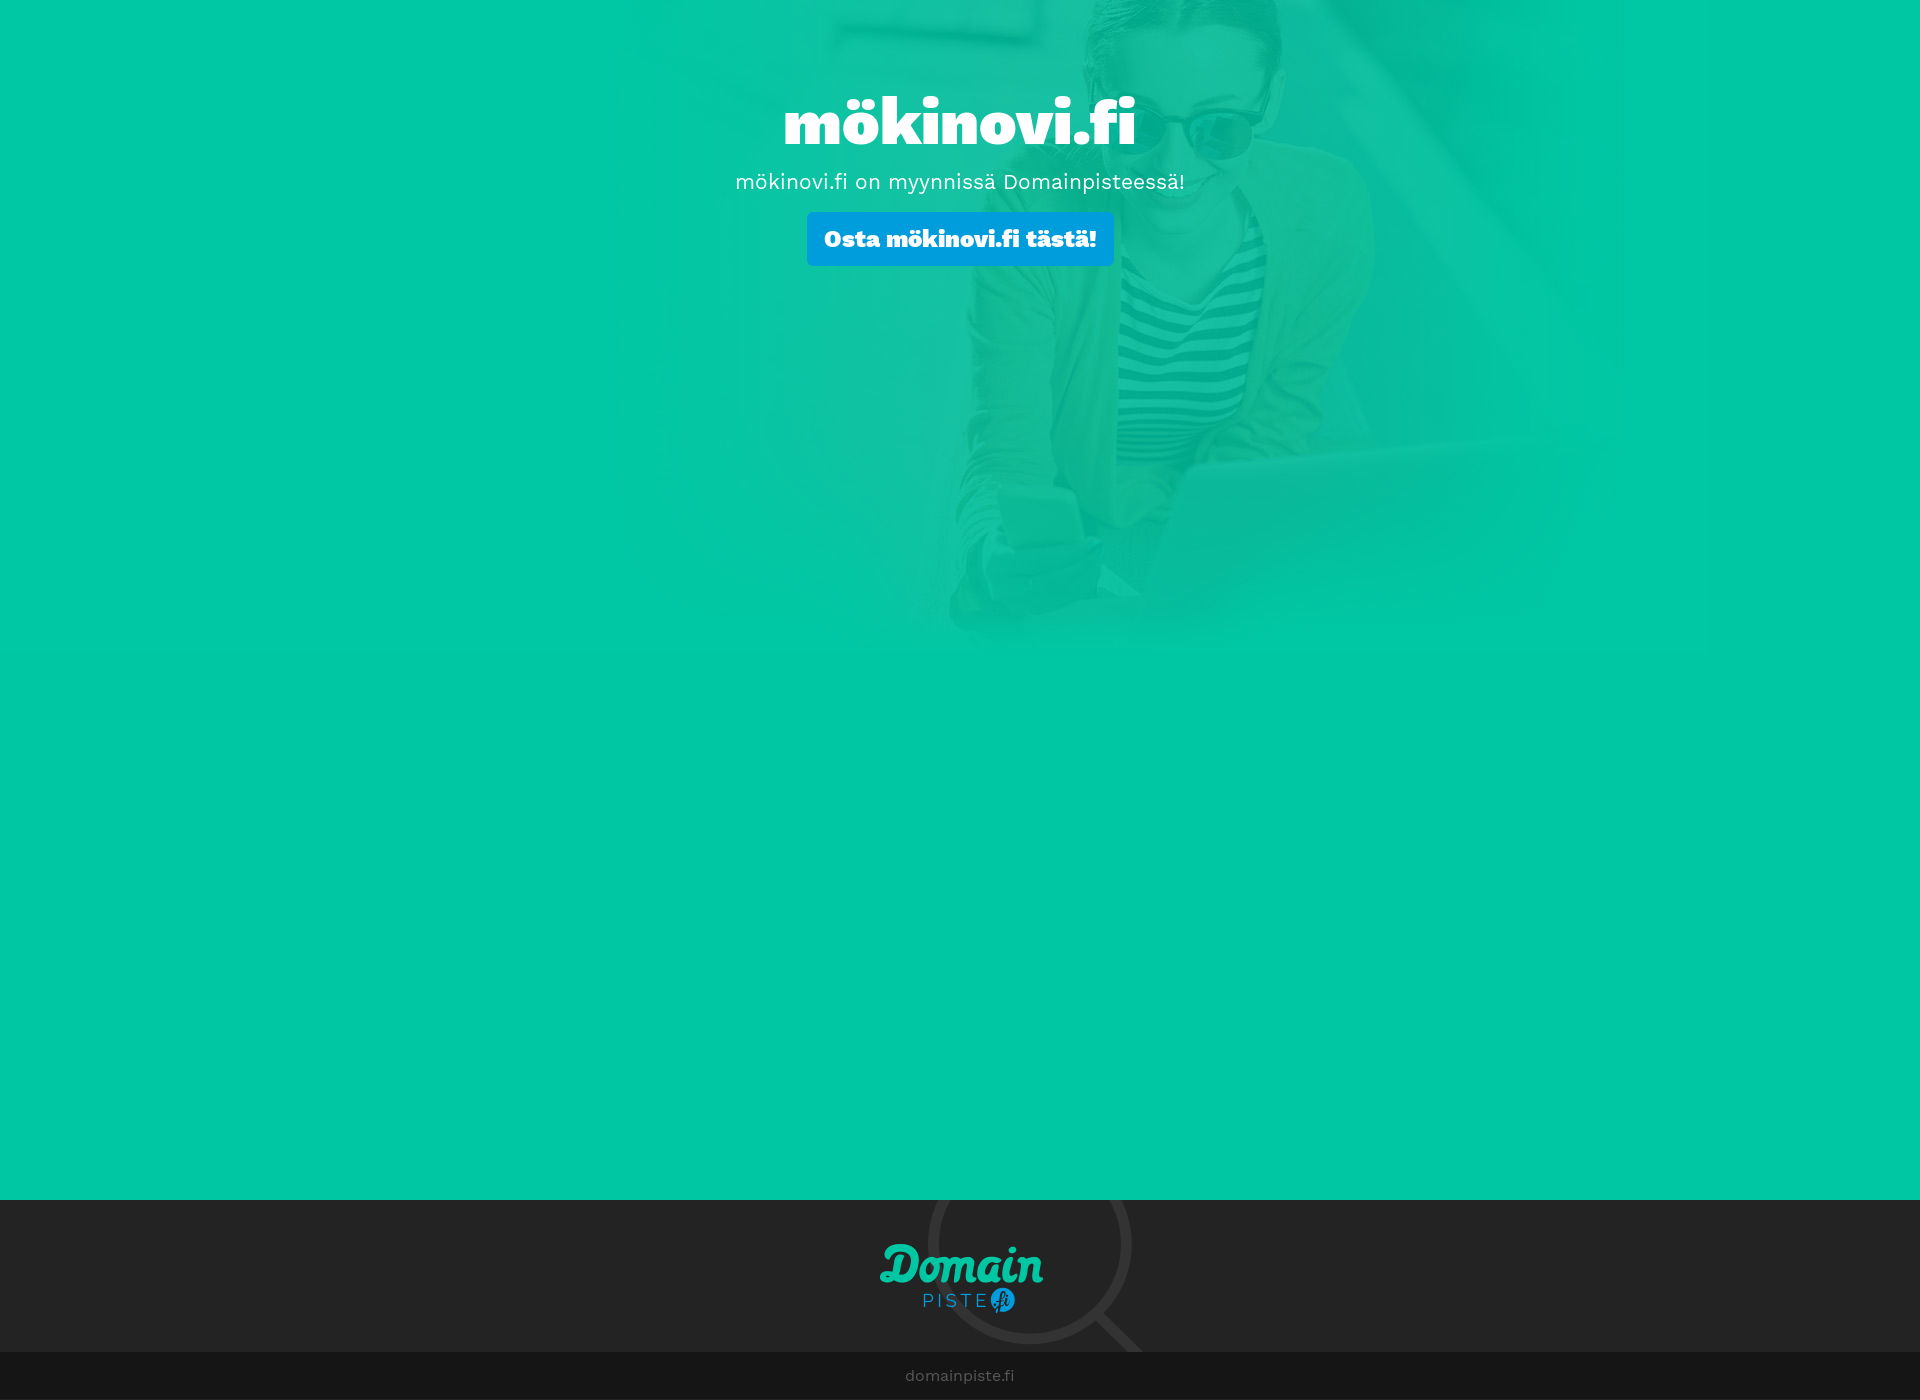 Skärmdump för mökinovi.fi